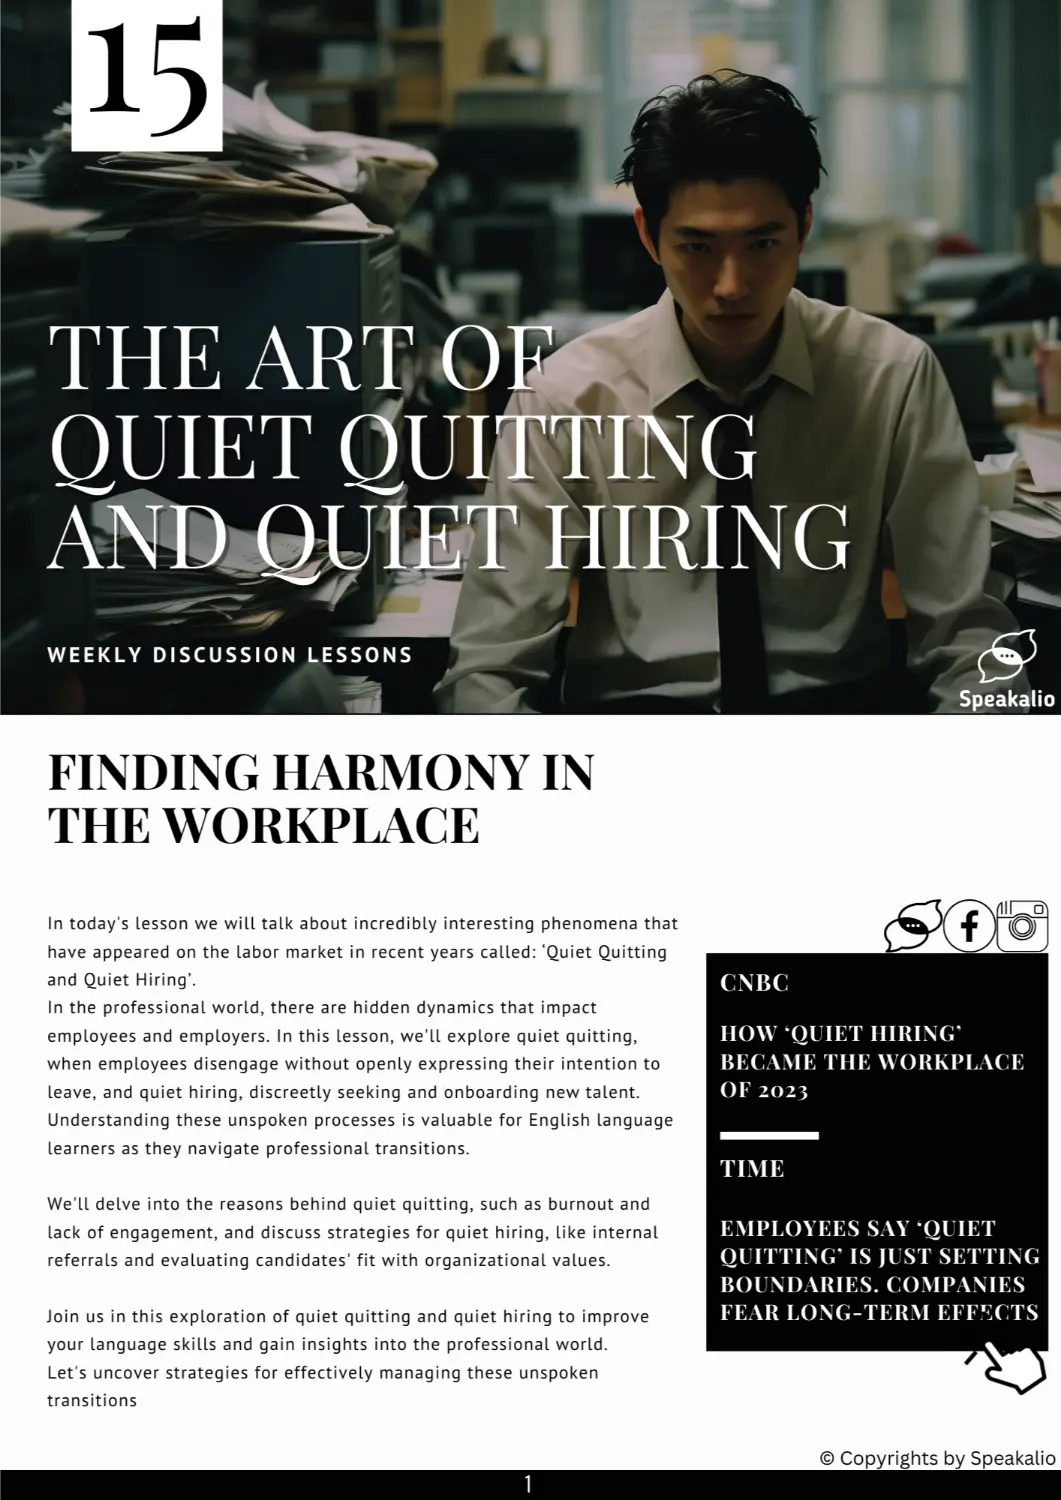 The art of 'Quiet quitting' and 'Quiet hiring'